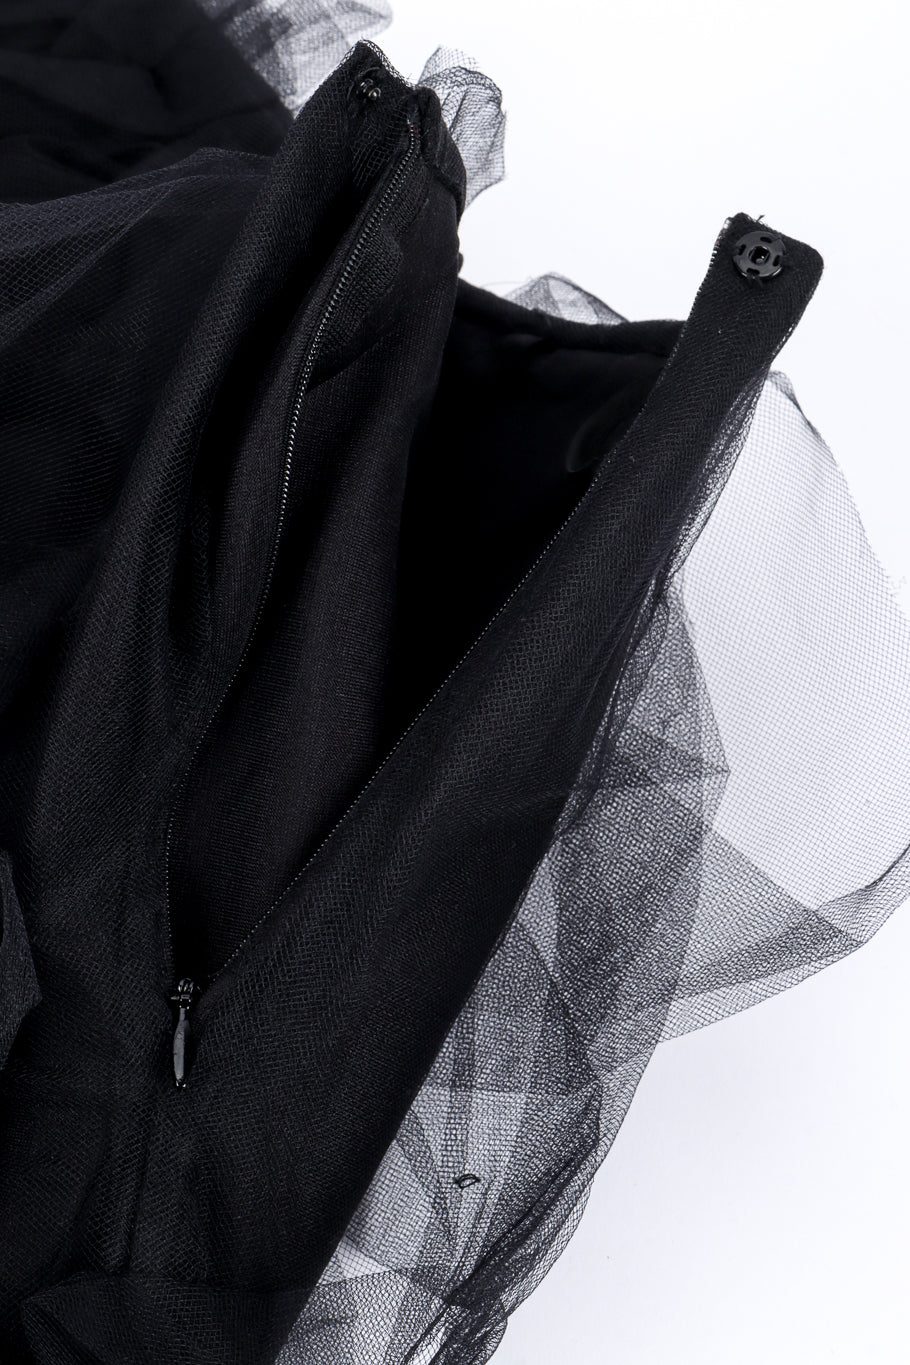 Salvatore Ferragamo Ruched Tulle Skirt side zipper closeup @recessla